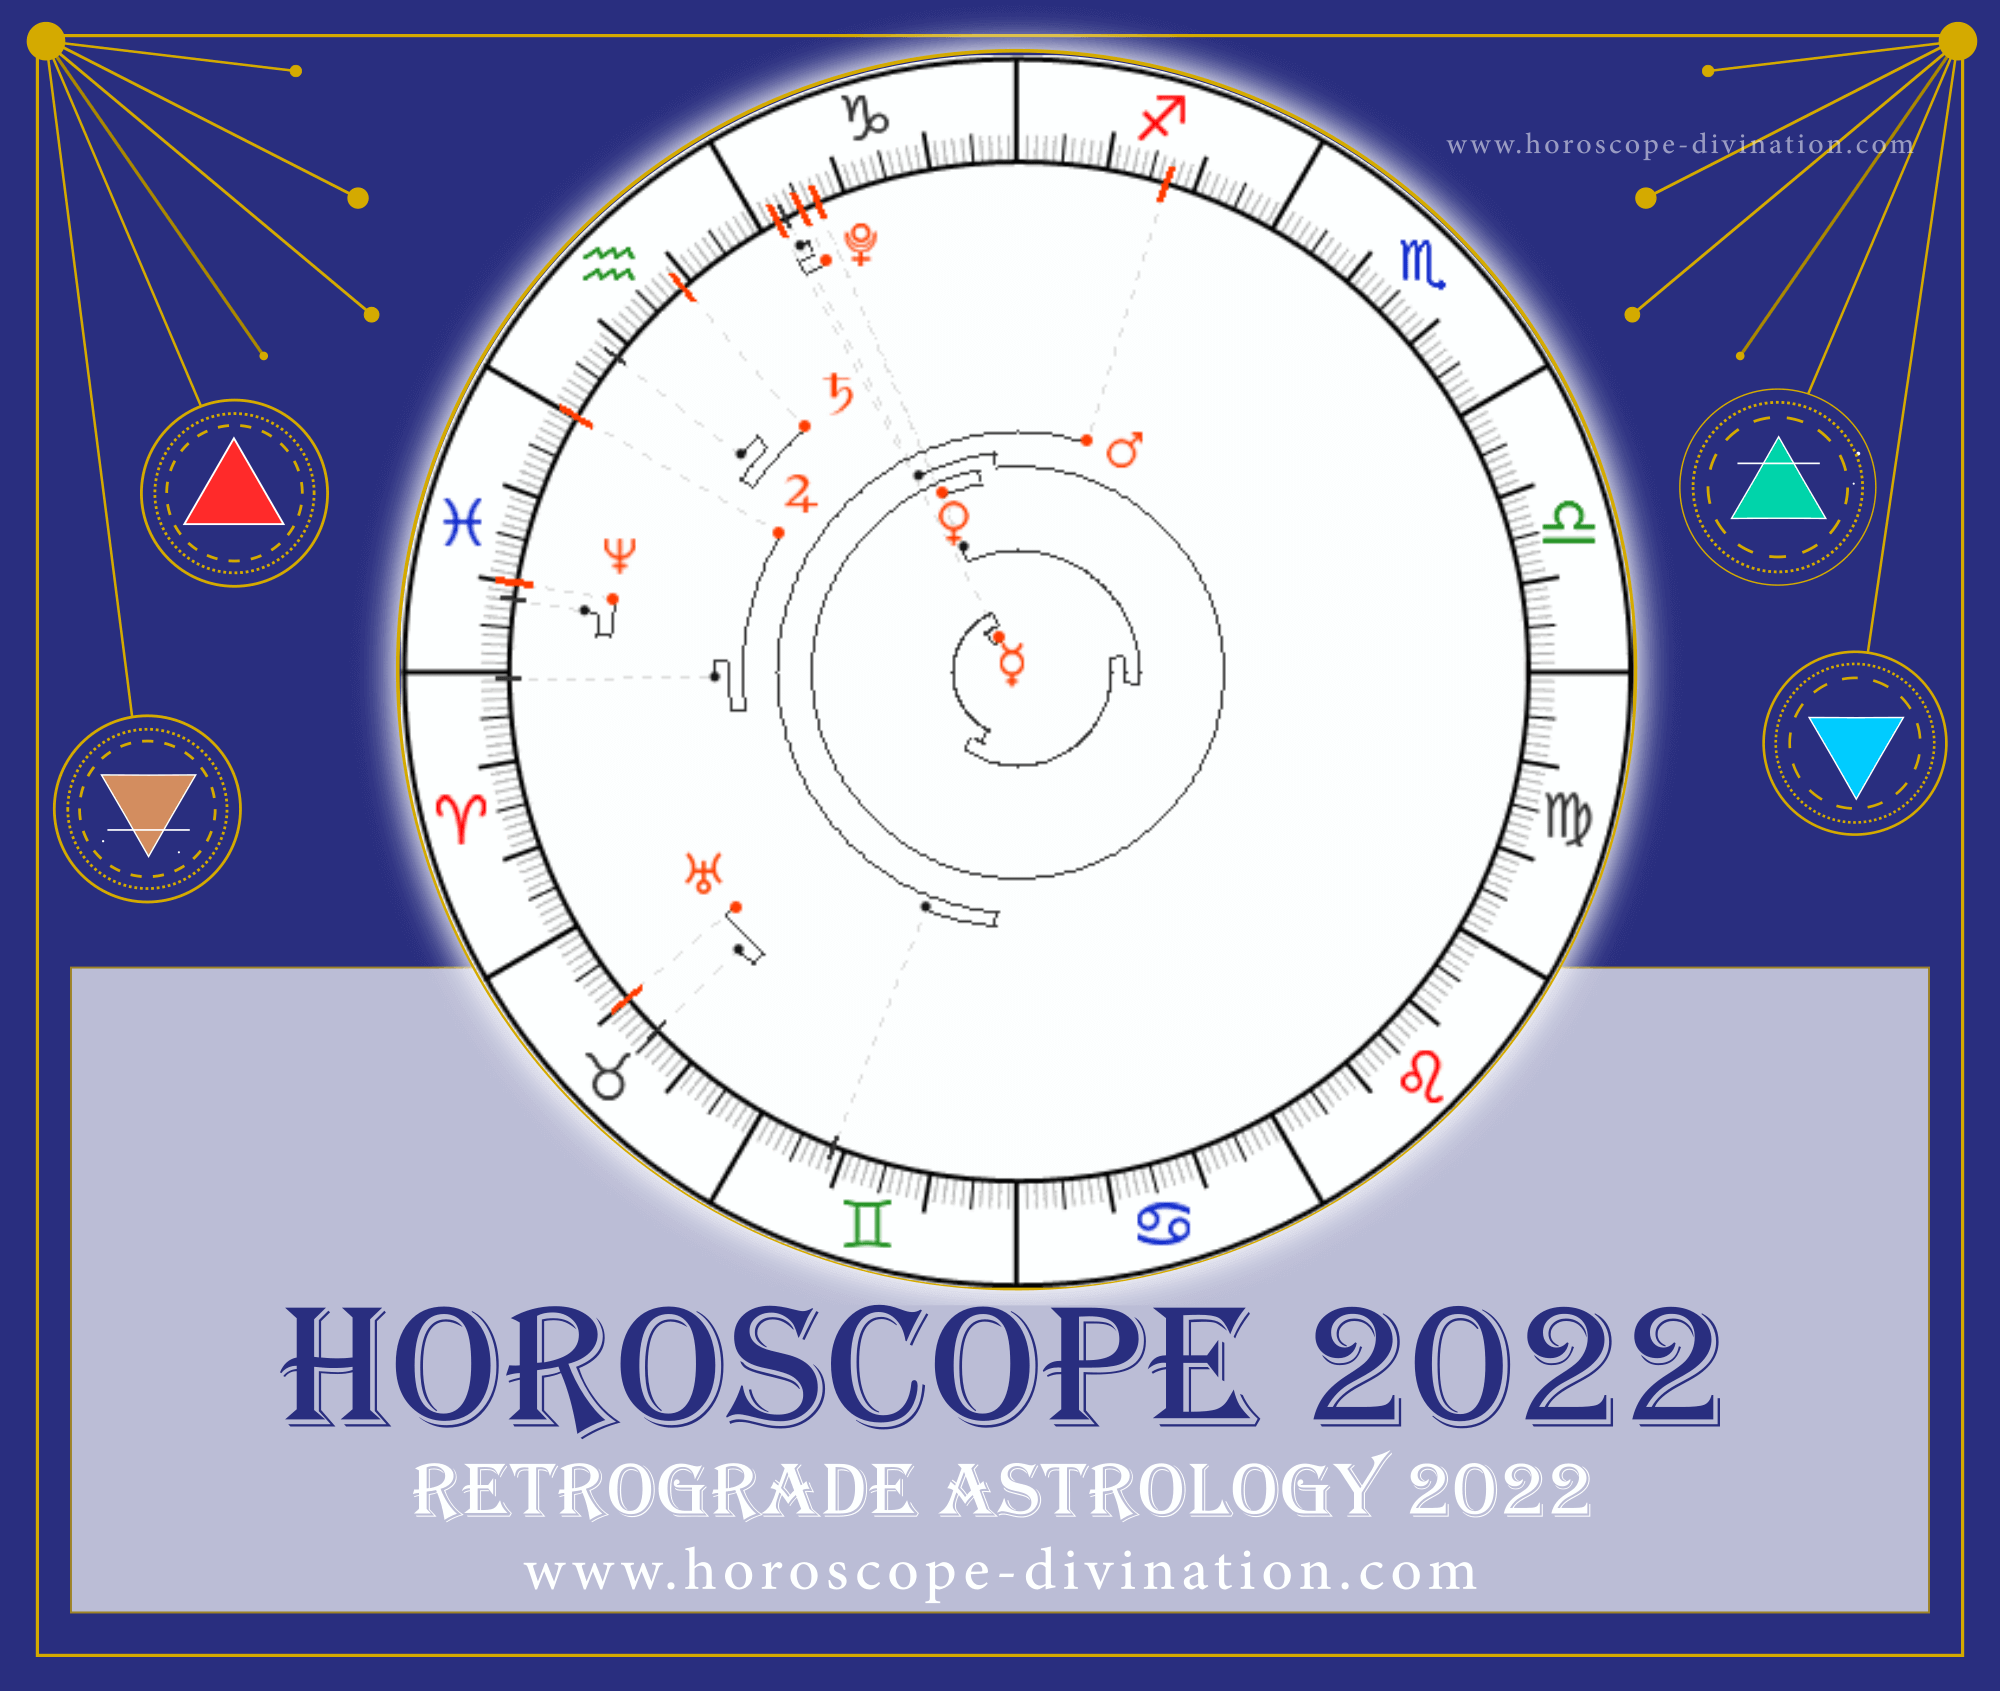 Retrograde Astrology 2022 - graph of Horoscope 2022 Aries